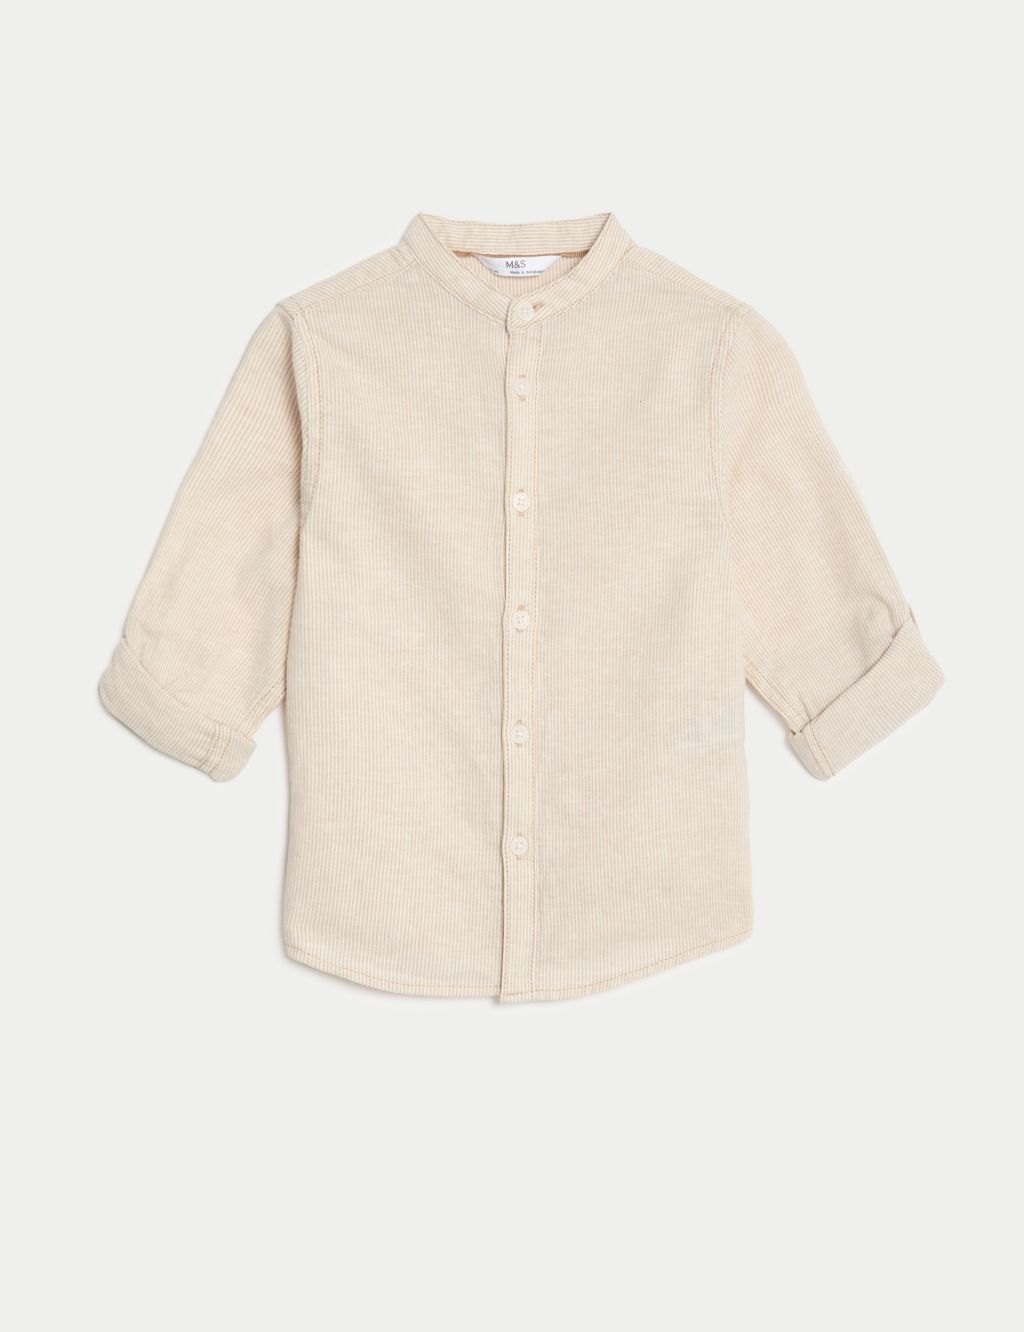 Cotton Rich Roll Sleeve Grandad Shirt (2-8 Years) image 2